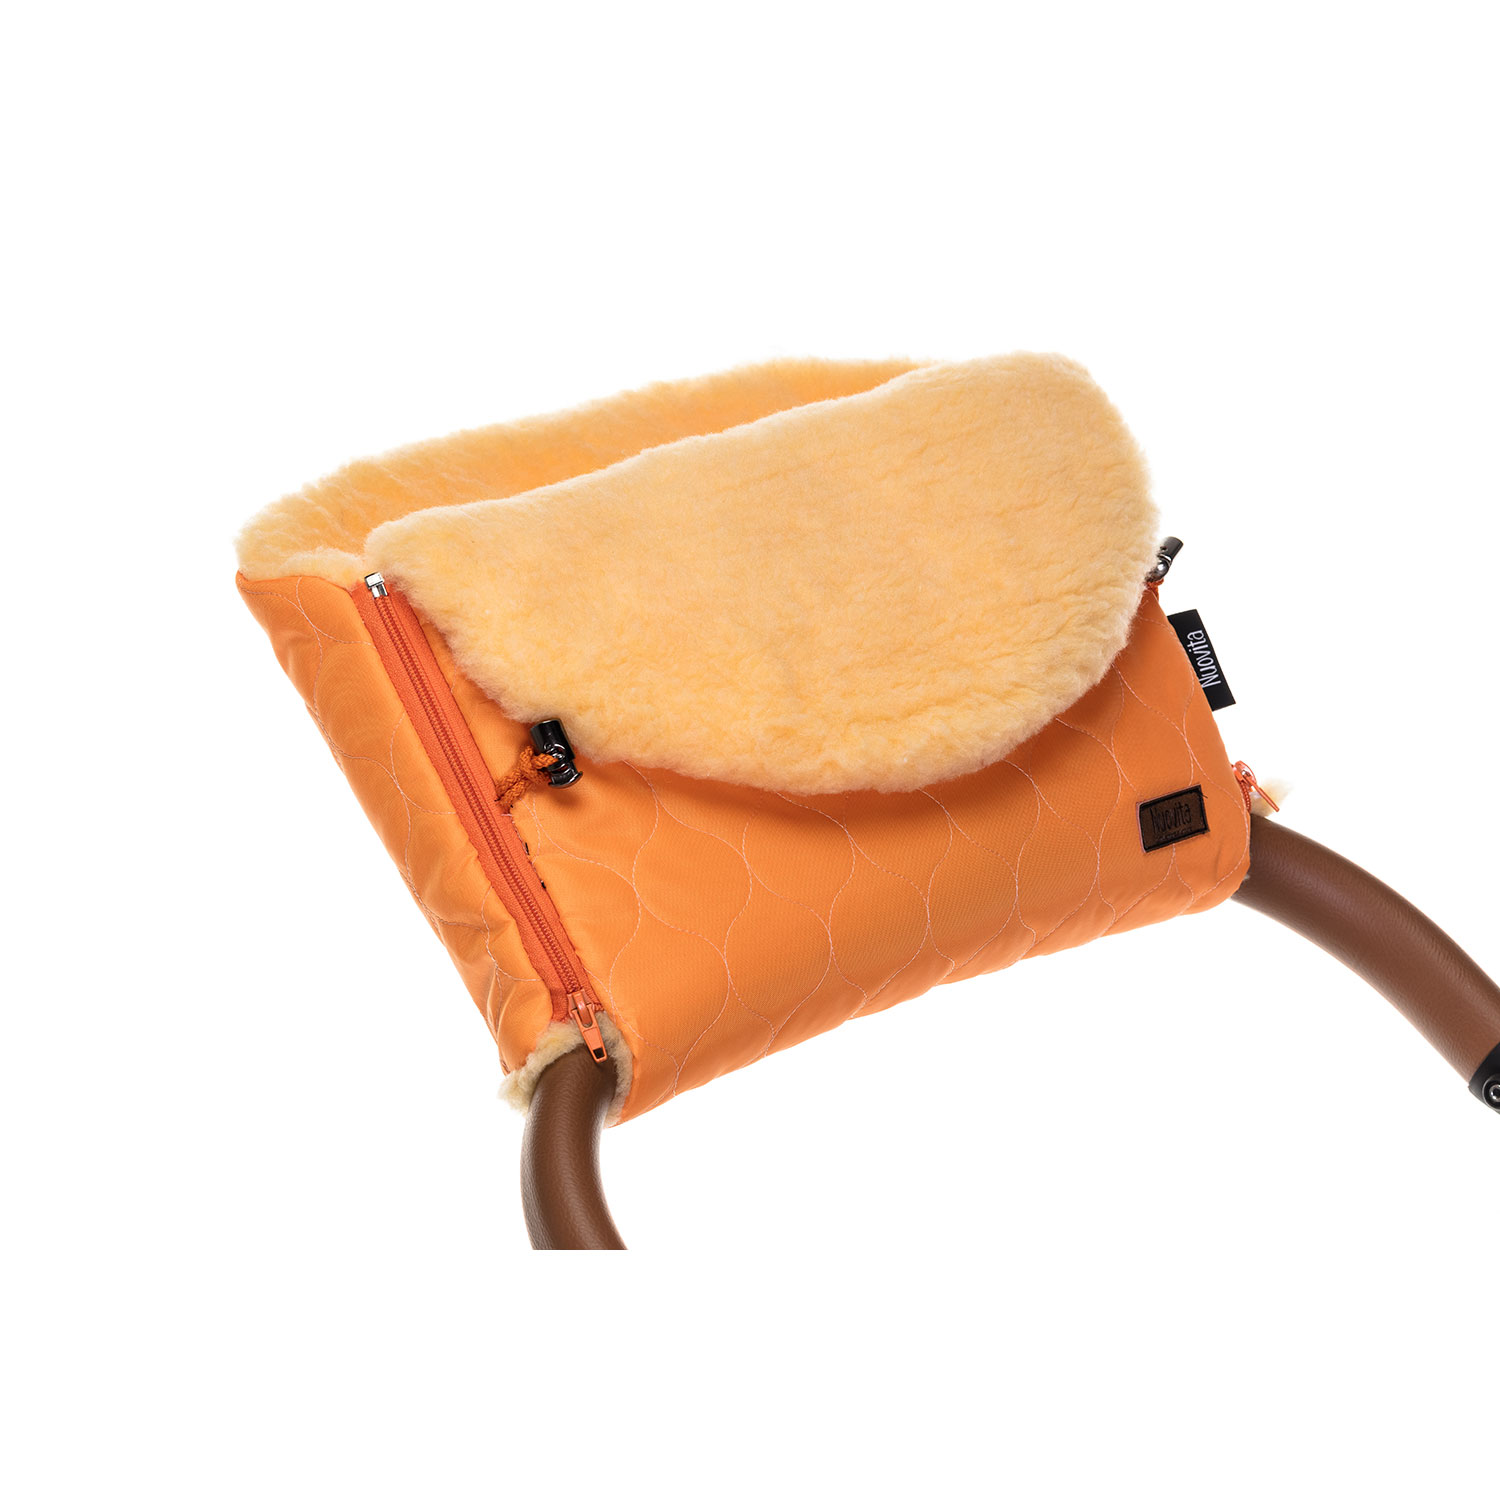 Муфта меховая для коляски Nuovita Polare Pesco оранжевая nuovita муфта меховая для коляски polare pesco